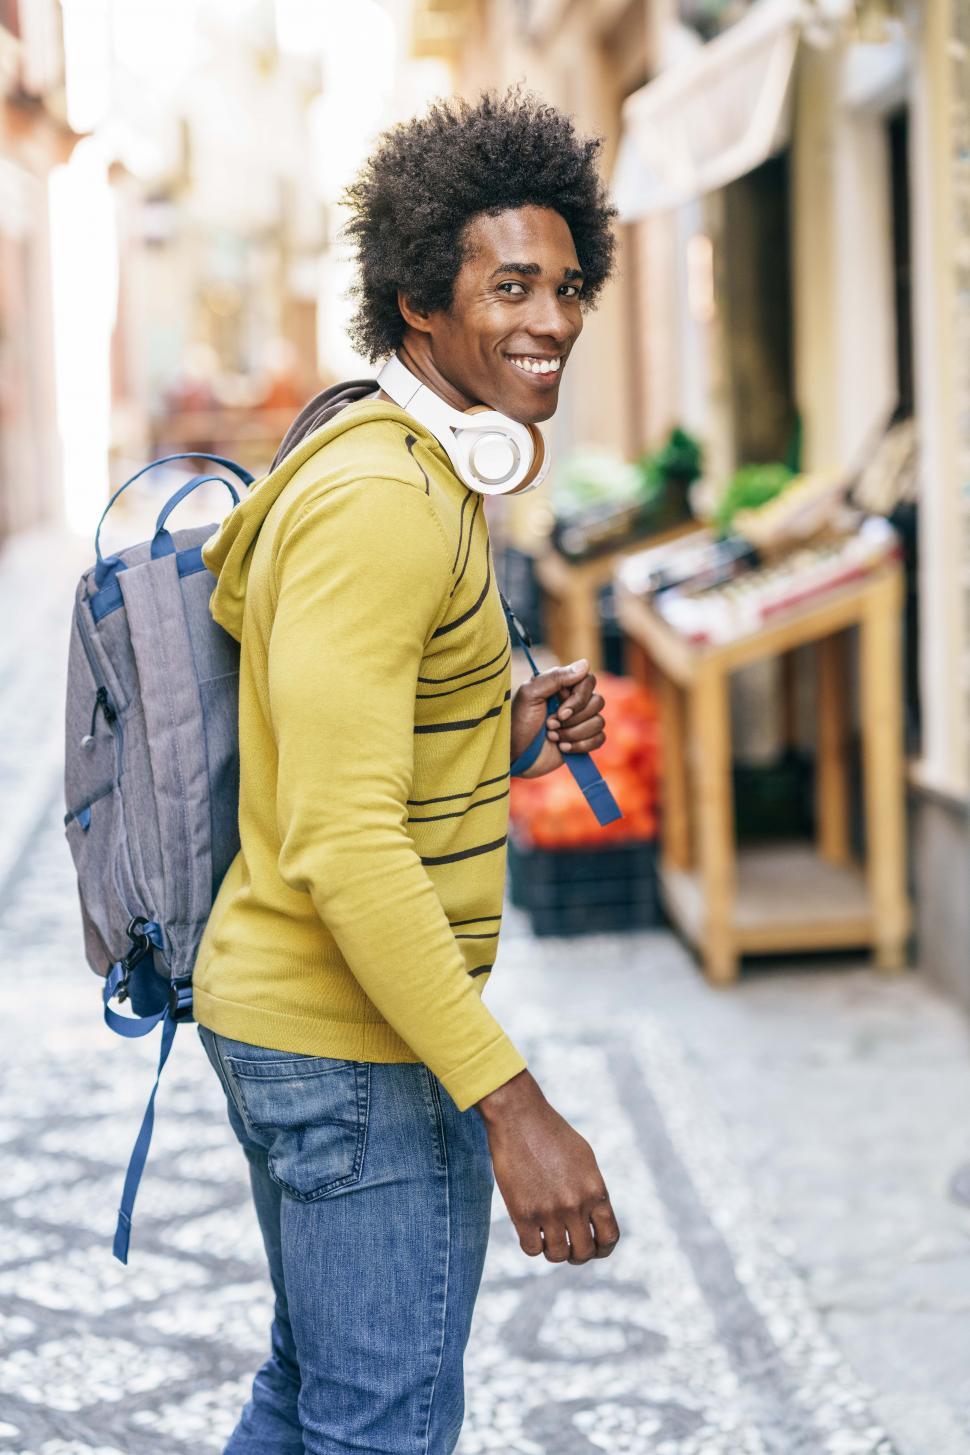 Free Image of Black man with wireless headphones sightseeing in Granada 